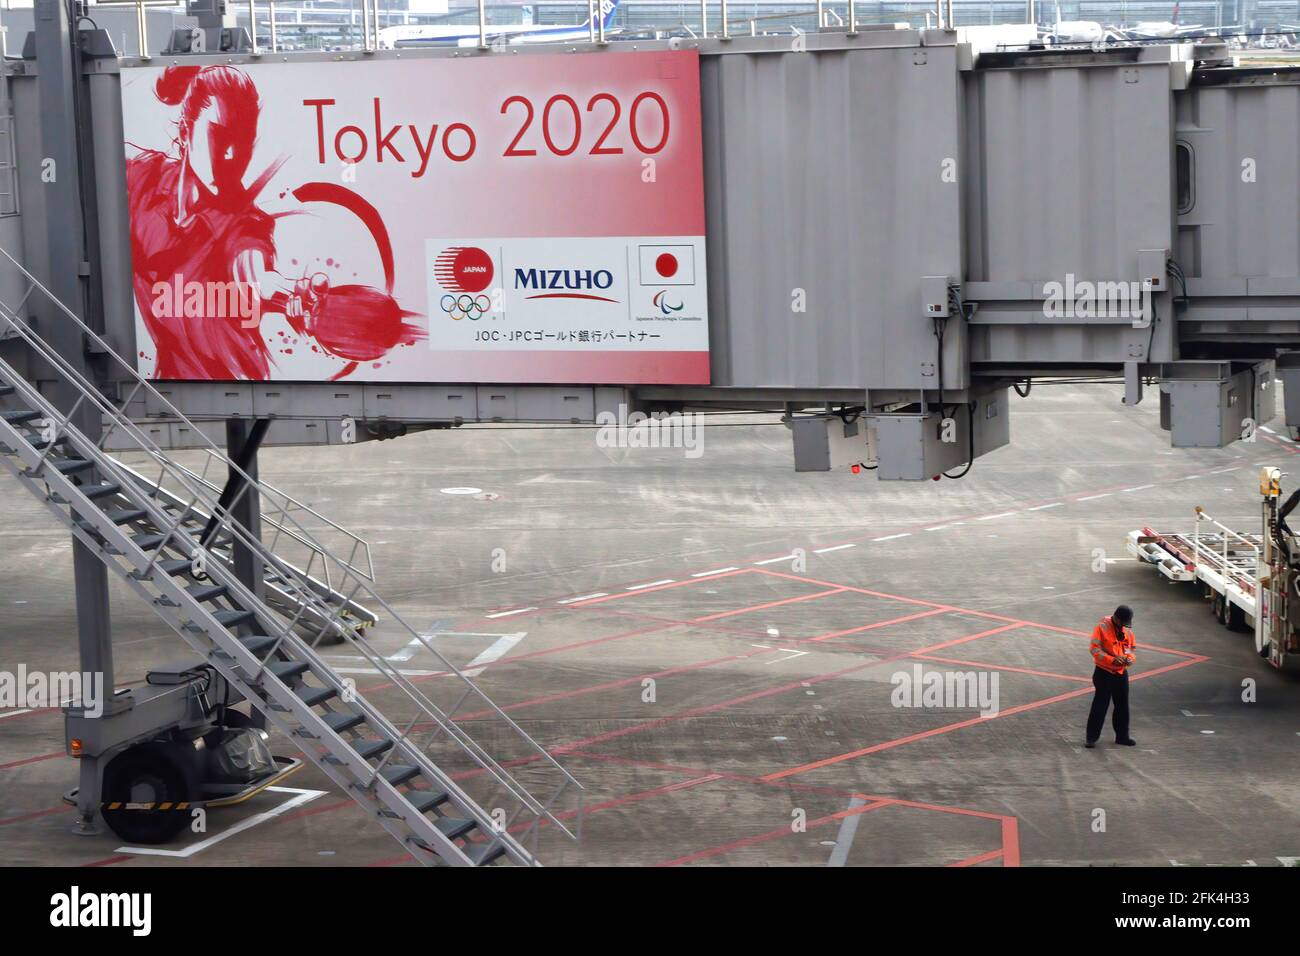 A Tokyo Olympics 2020 billboard seen at Tokyo Haneda International Airport. Stock Photo